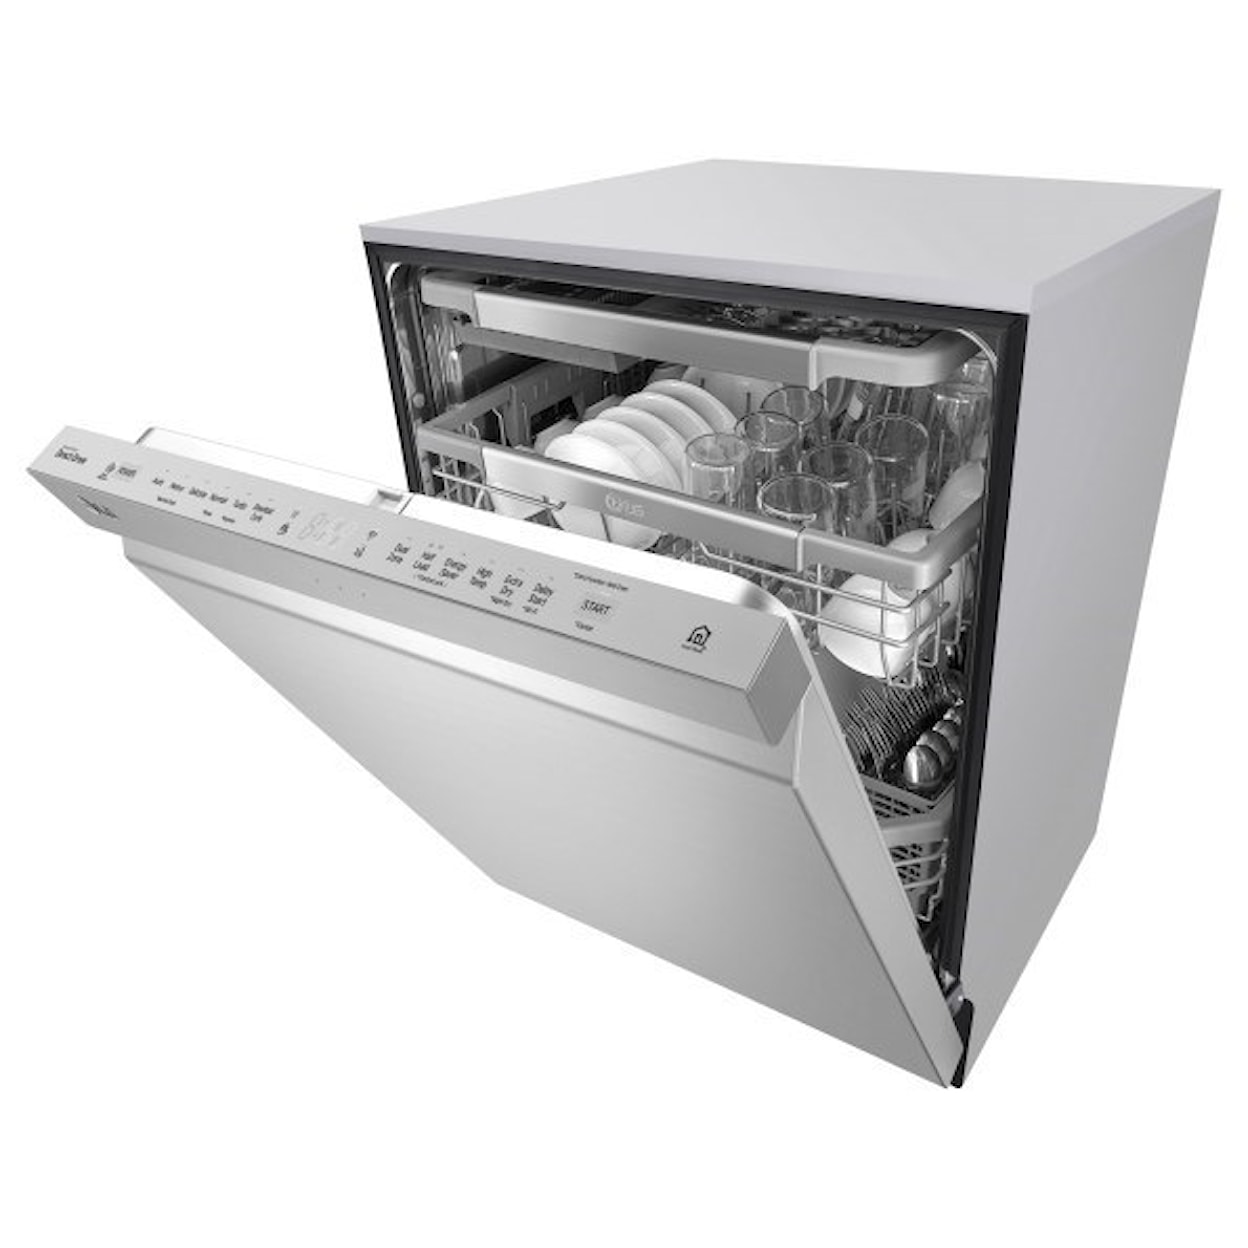 LG Appliances Dishwashers Top Control QuadWash™ Dishwasher